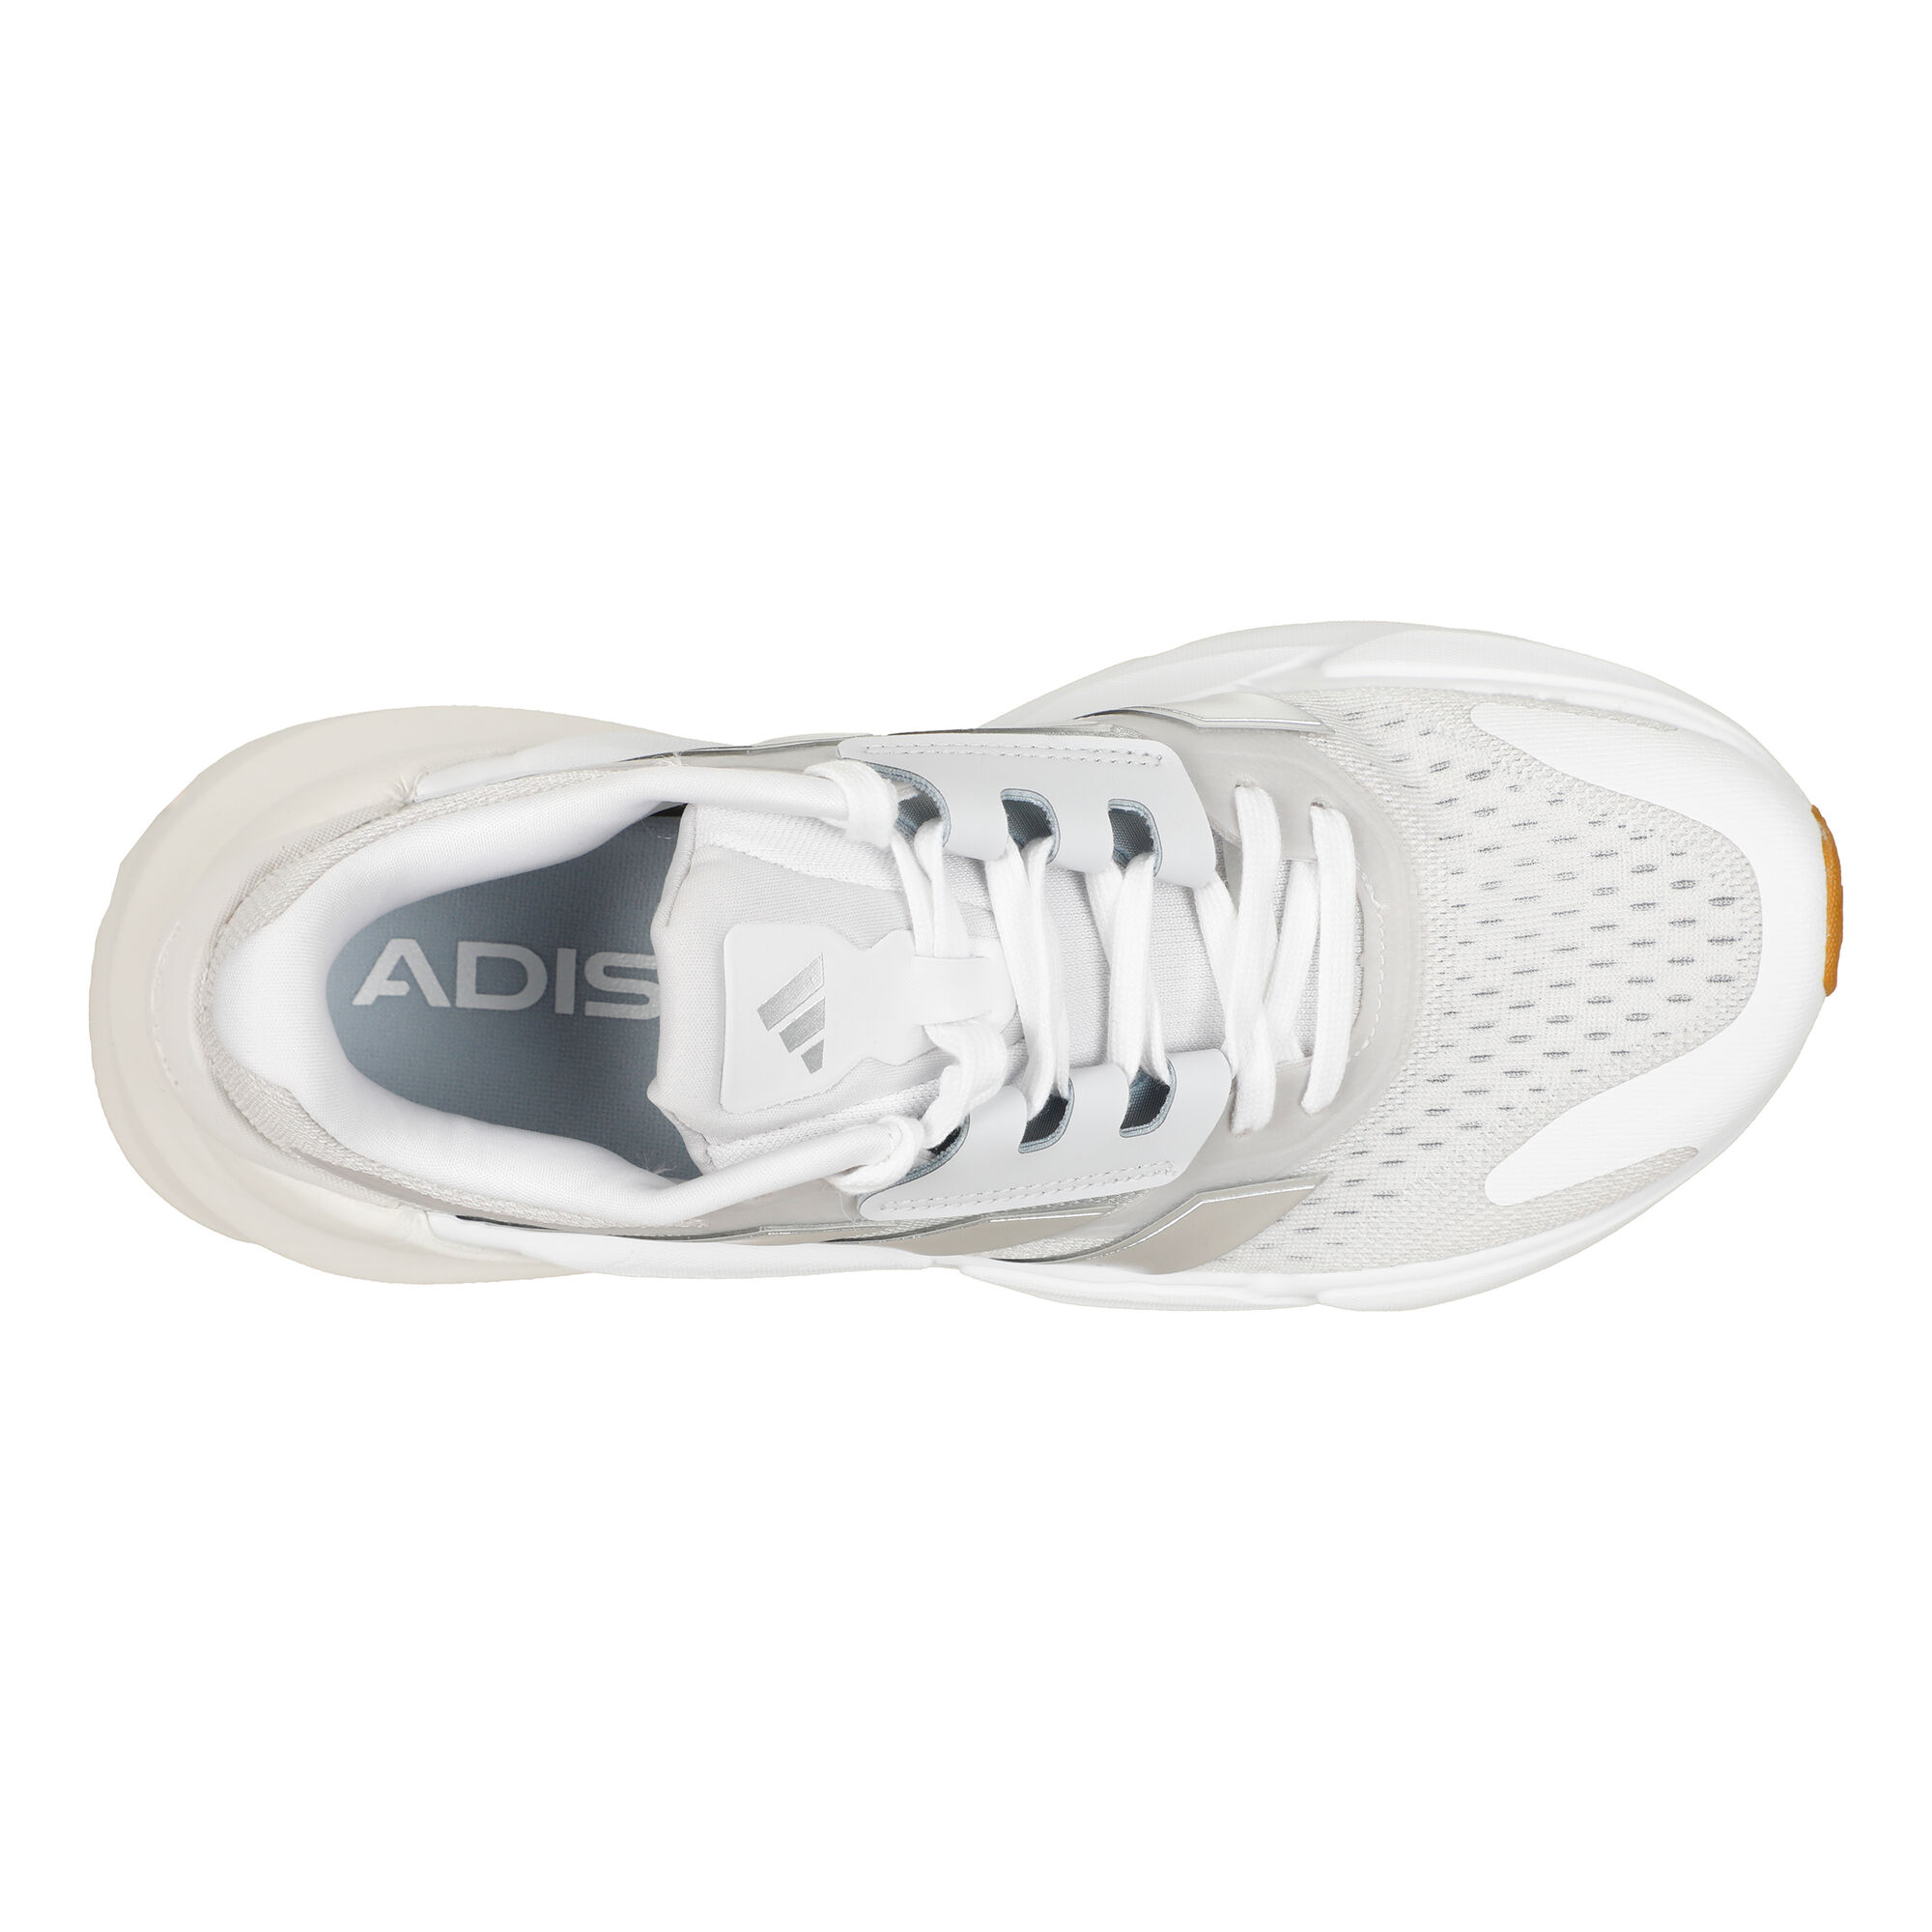 kapperszaak Betsy Trotwood Schaken buy adidas Adistar 2 Neutral Running Shoe Women - White, Grey online |  Running Point